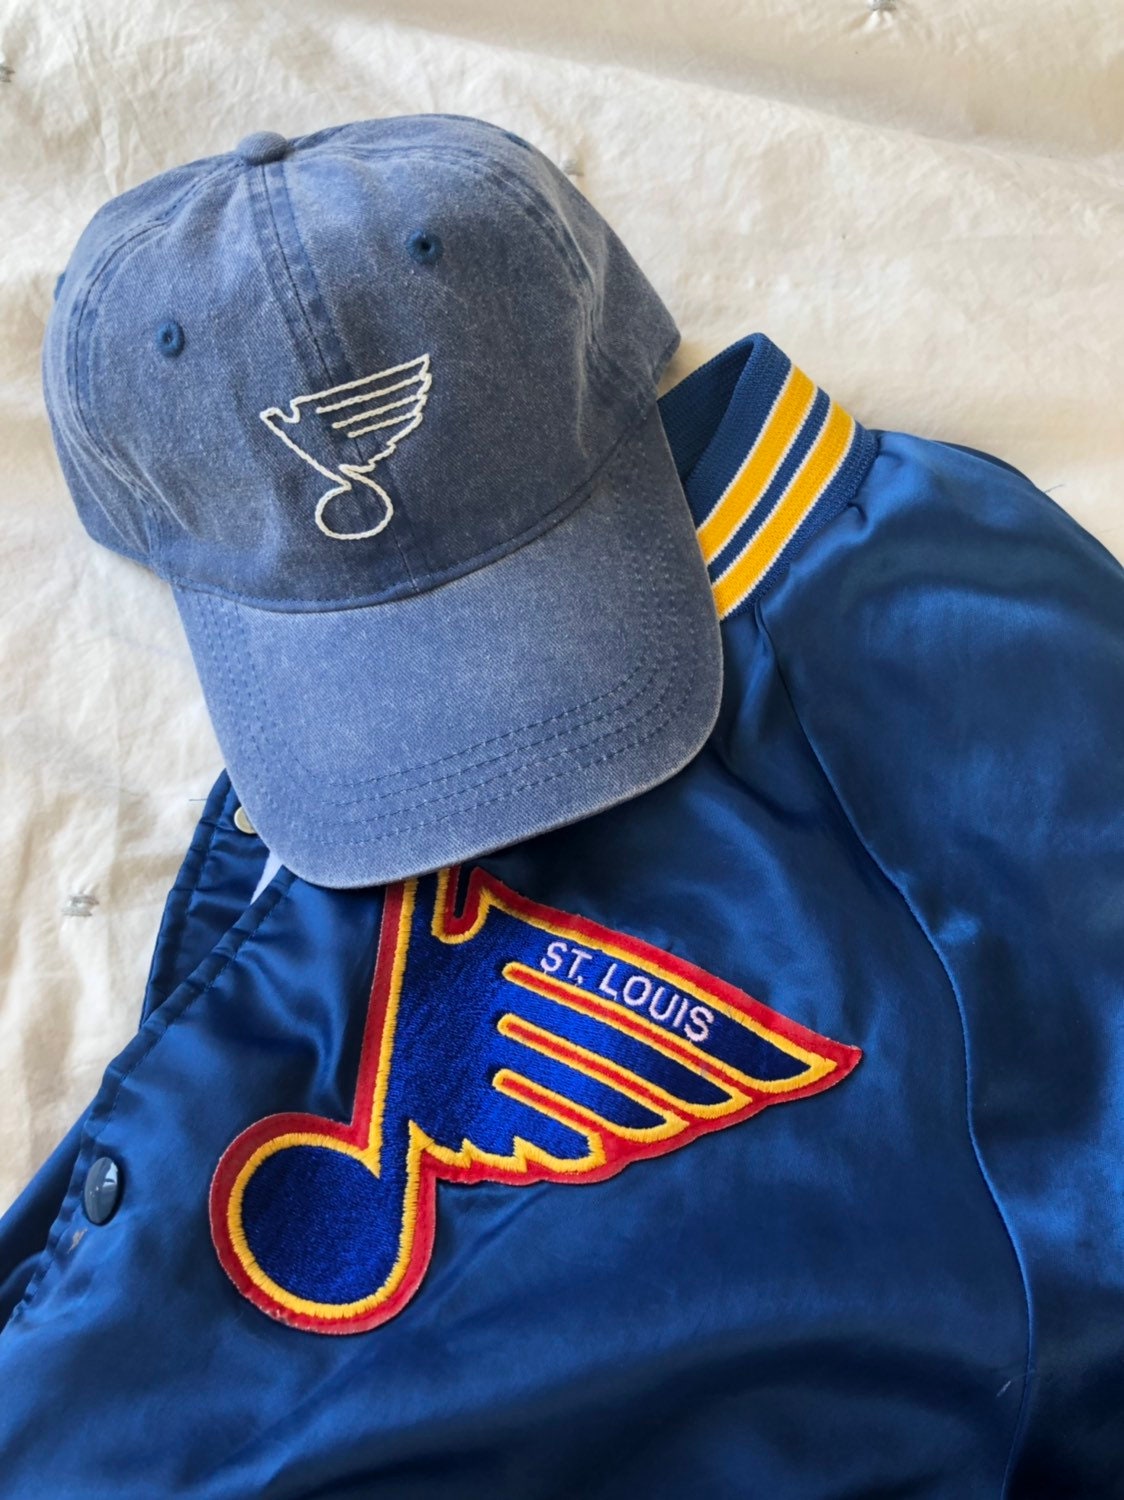 St. Louis Blues Classic Note Logo ‘47 Brand Strapback Hat Navy Blue